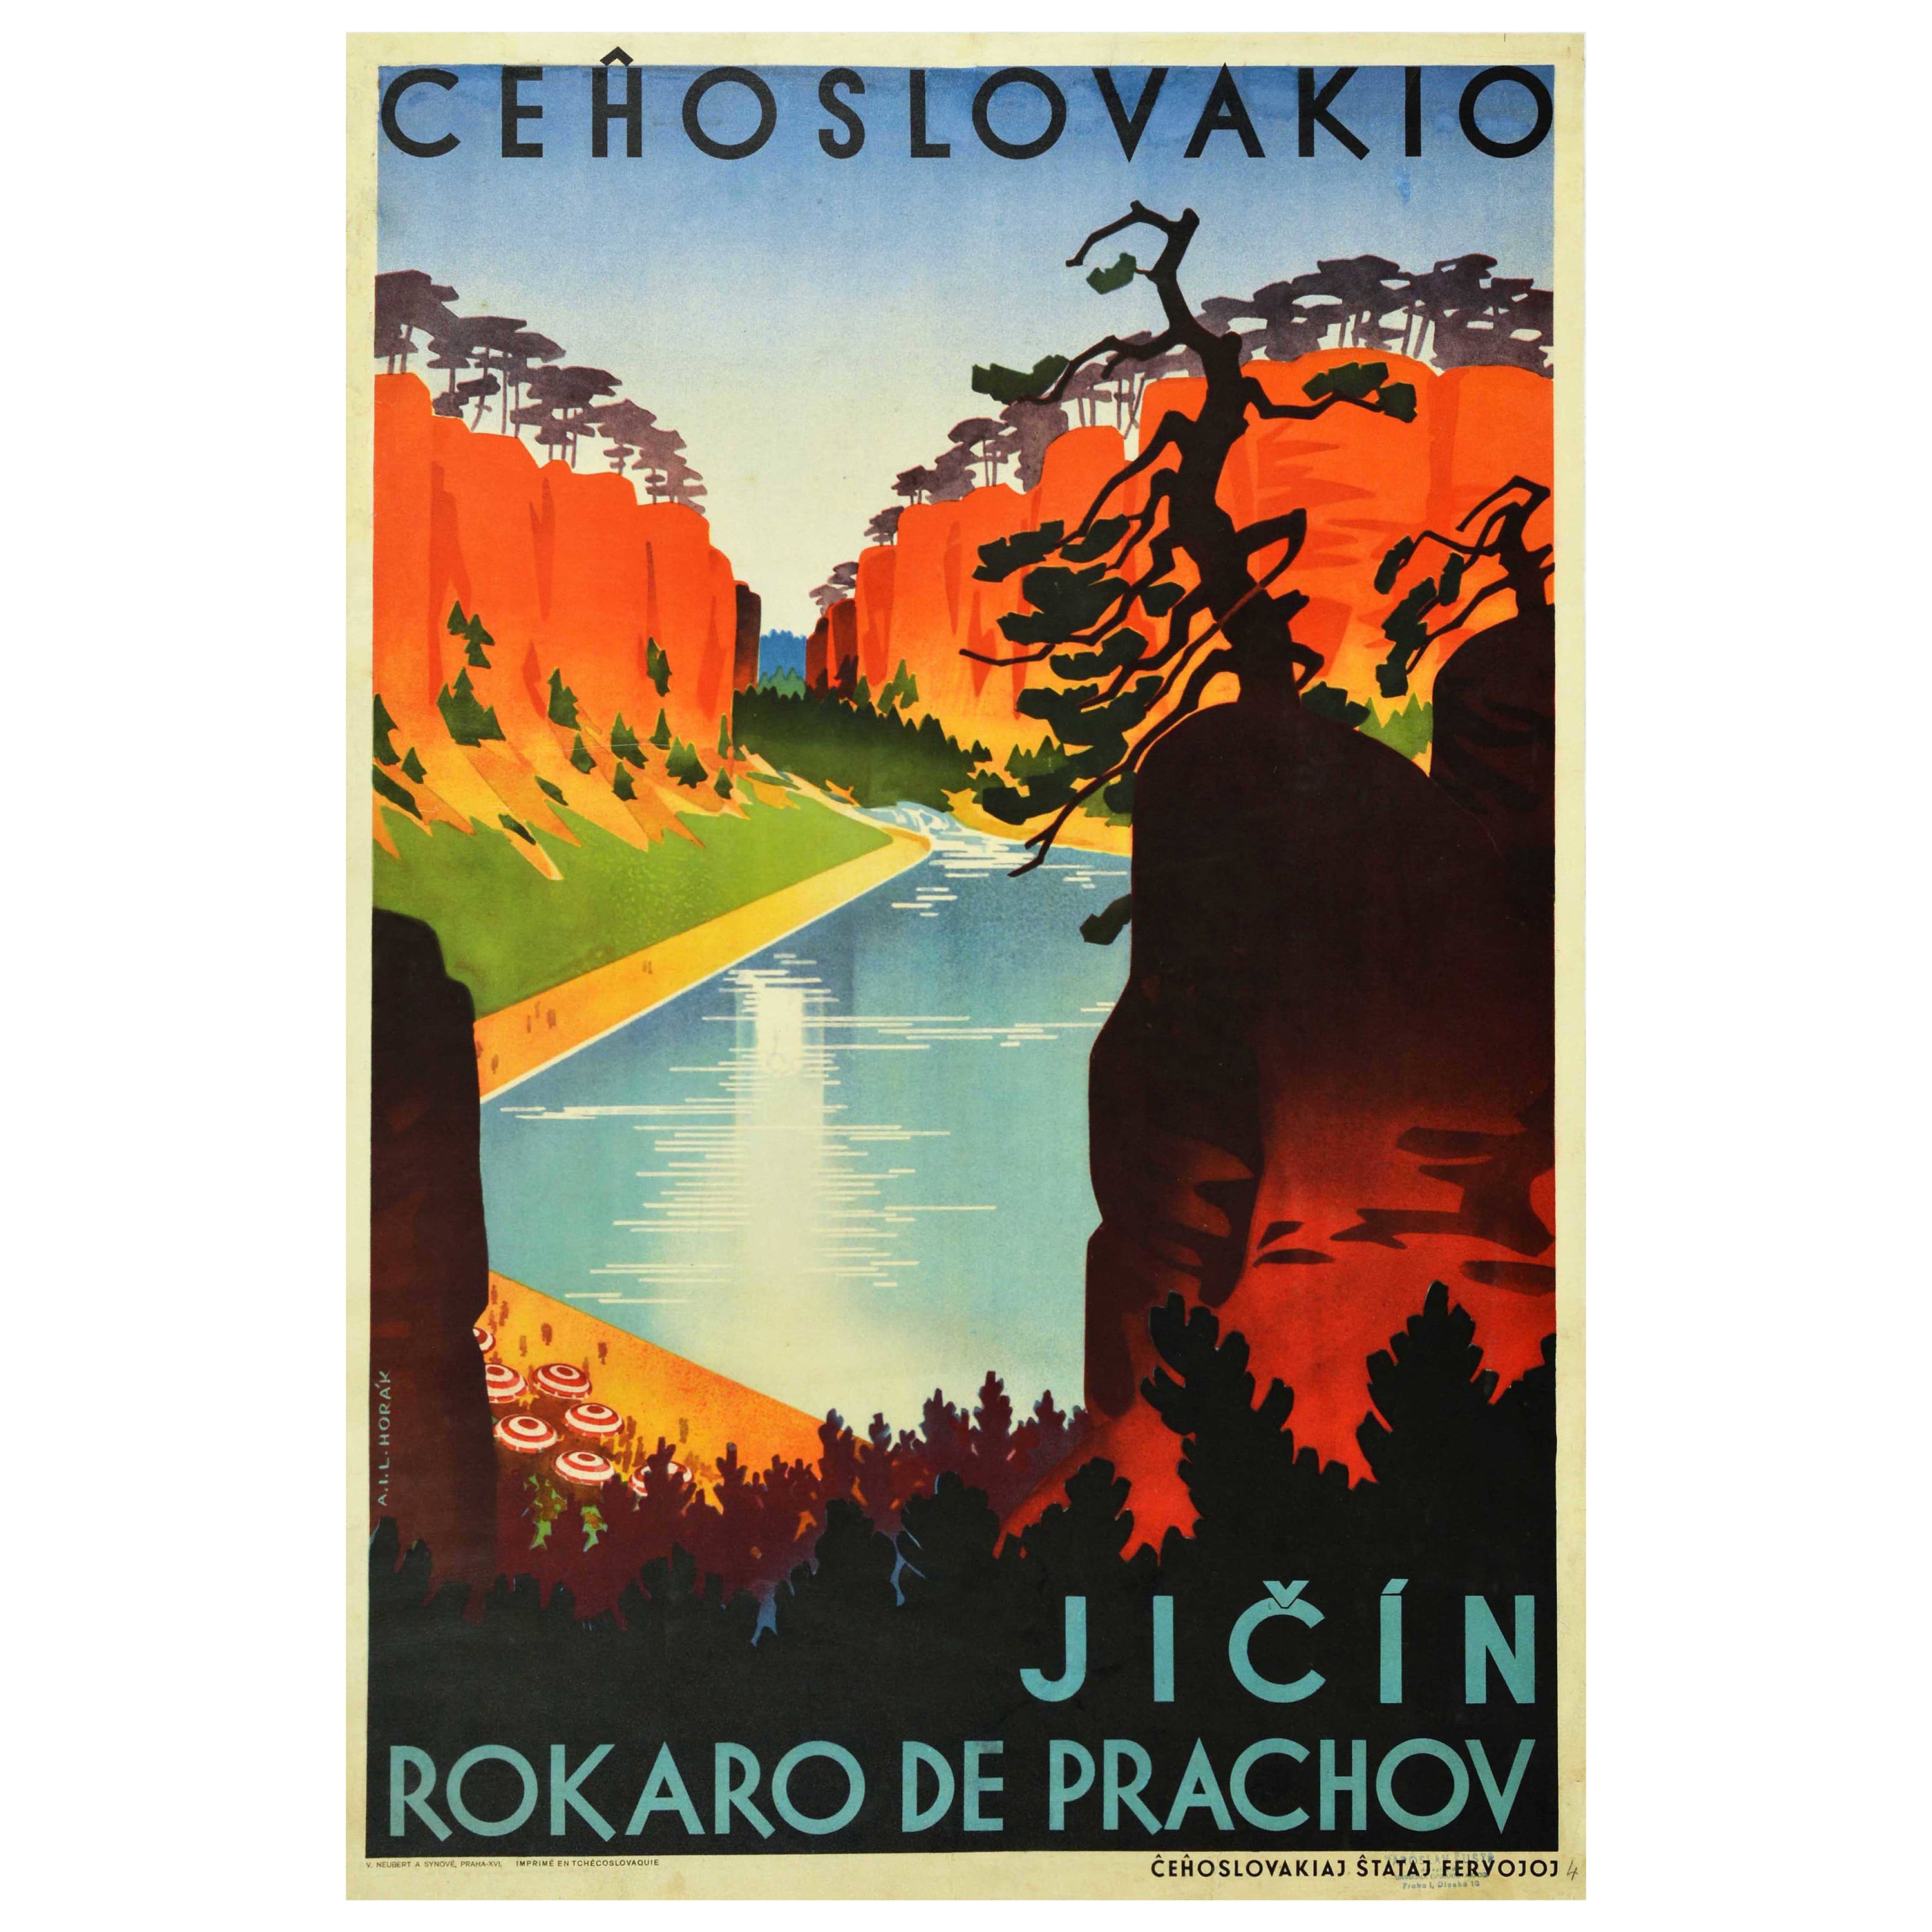 Original Vintage Railway Poster Czechoslovakia Jicin Prachov Rocks Travel Art For Sale